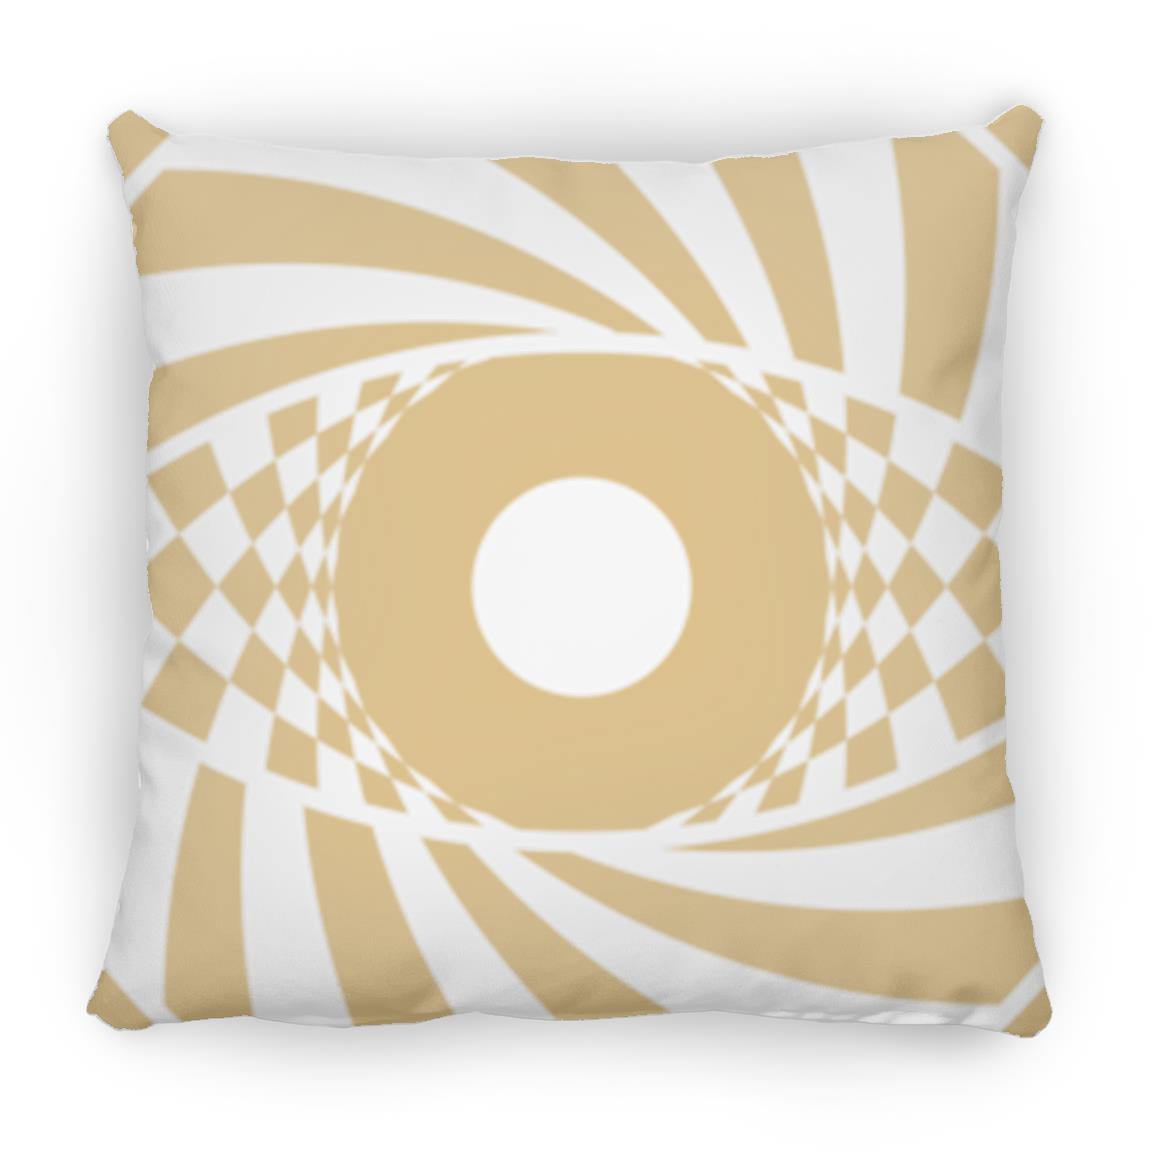 Crop Circle Pillow - Ufton - Shapes of Wisdom